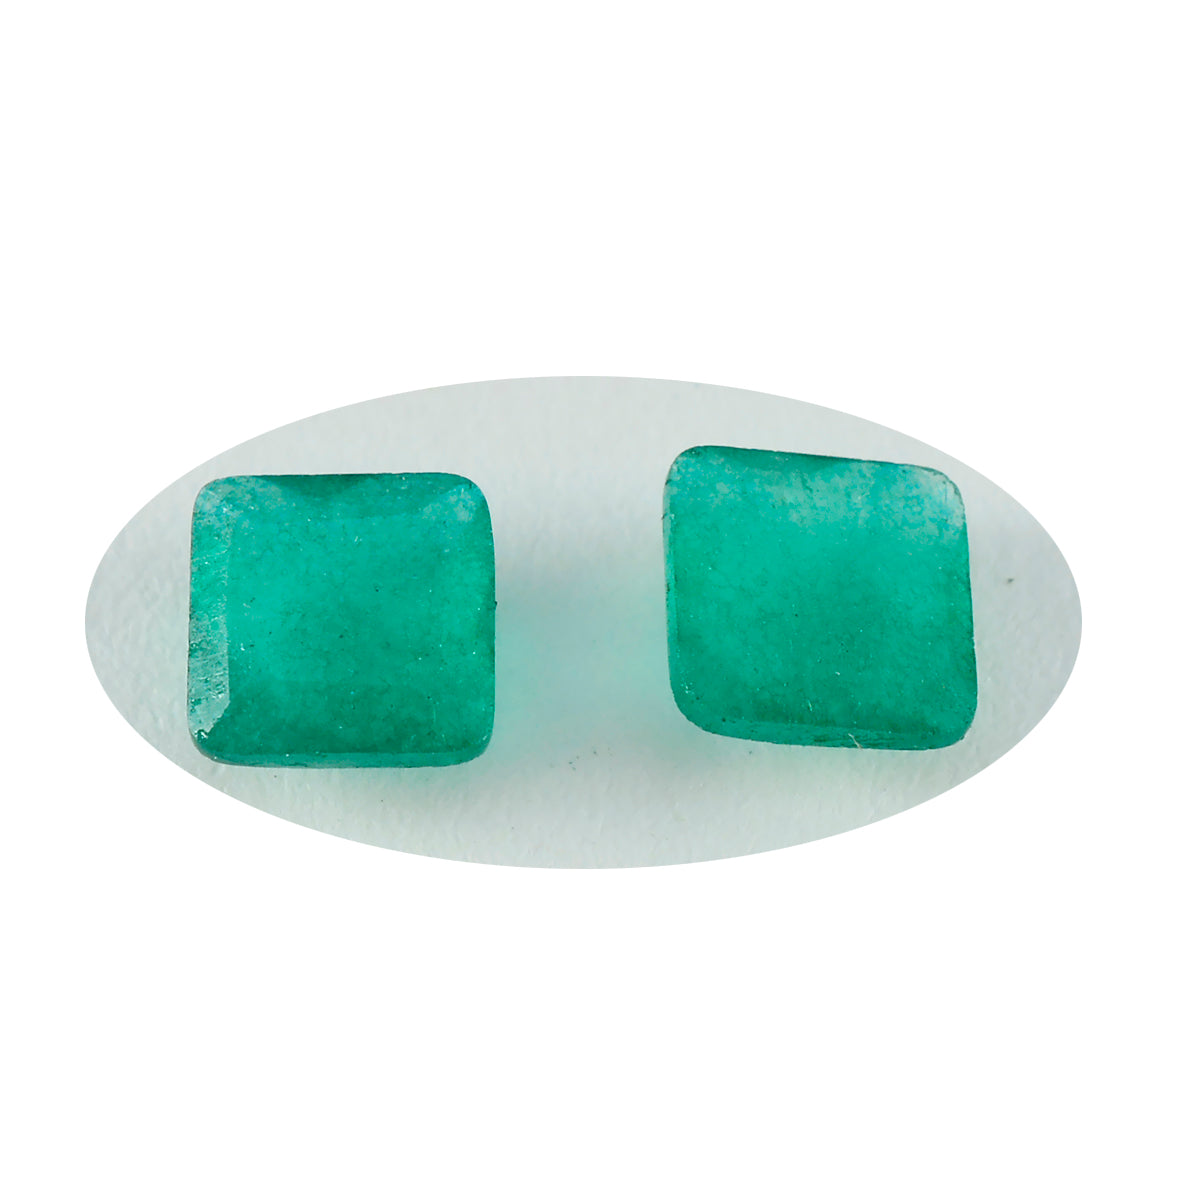 riyogems 1pc リアル グリーン ジャスパー ファセット 10x10 mm 正方形の形状、素晴らしい品質のルース宝石